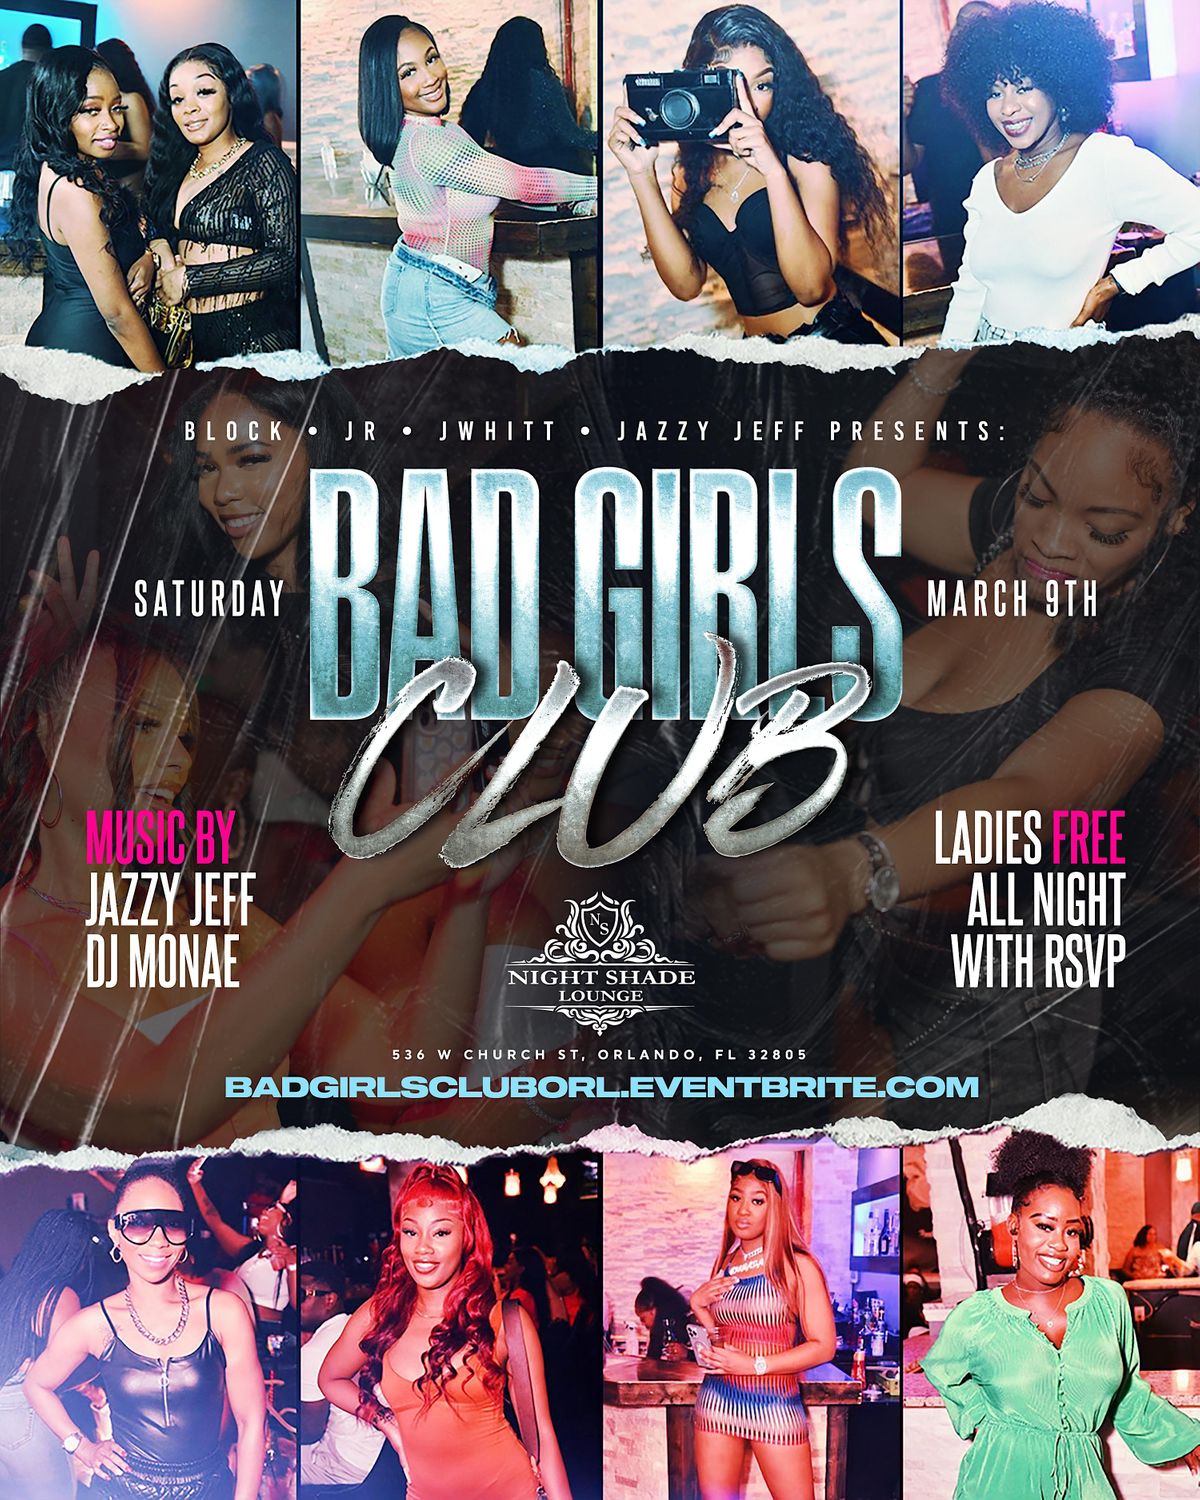 BAD GIRLS CLUB: LADIES FREE ALL NIGHT WITH RSVP